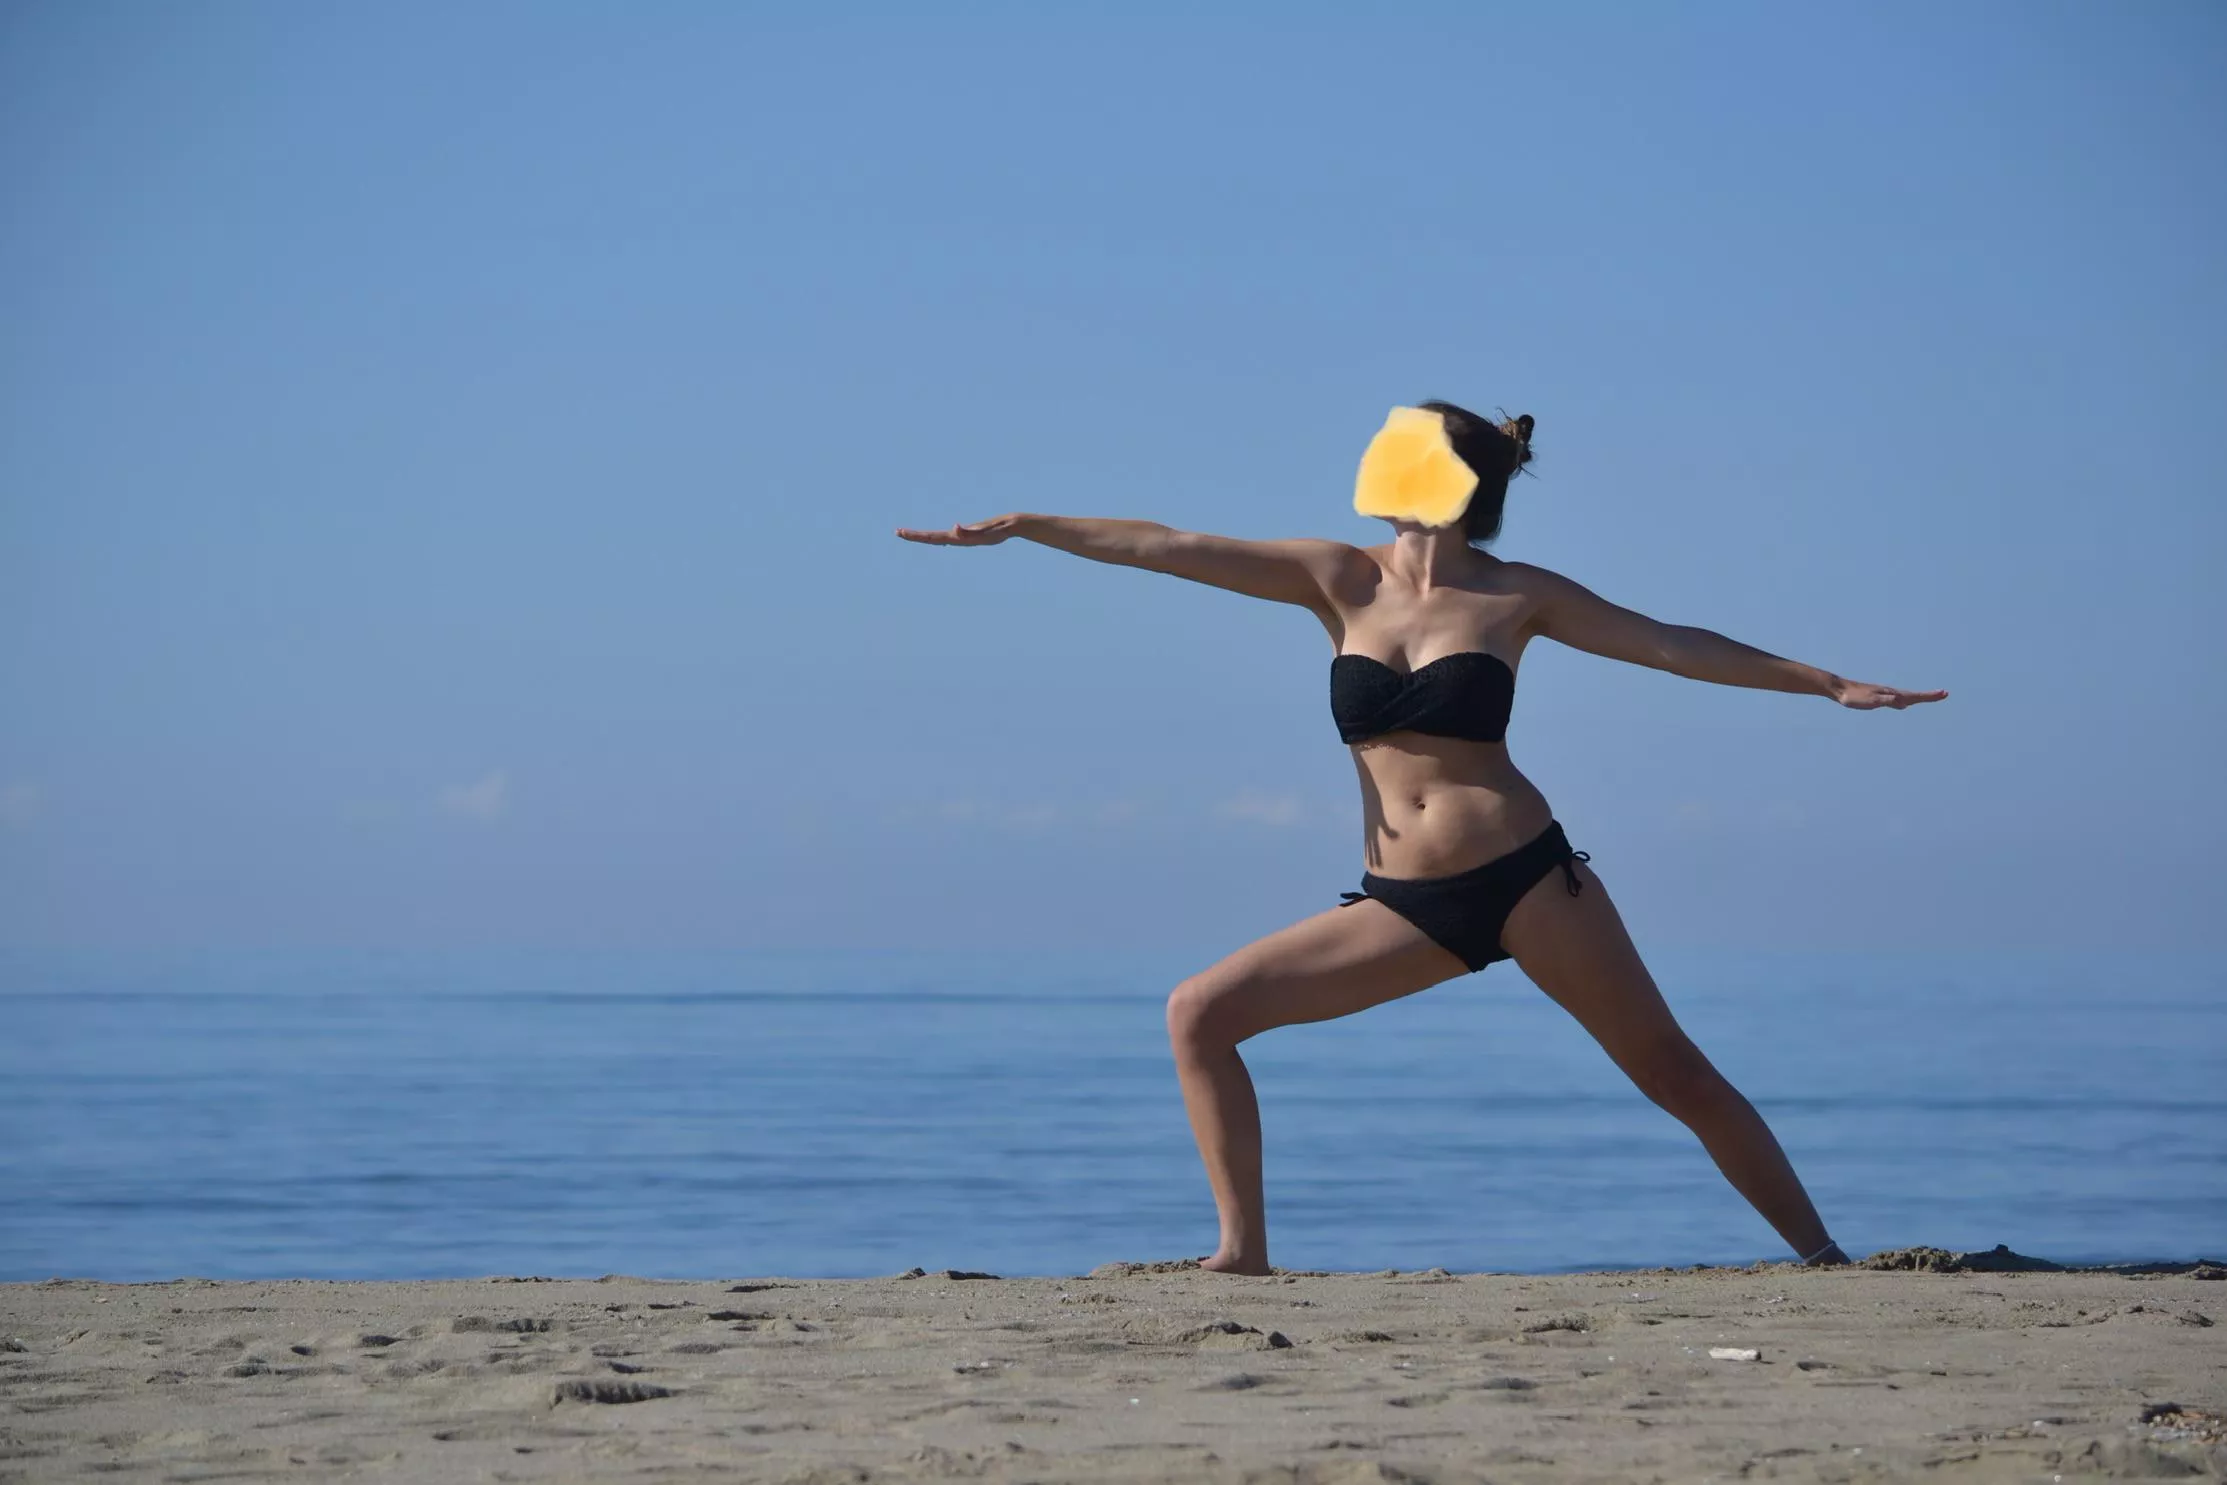 Beach yoga porno